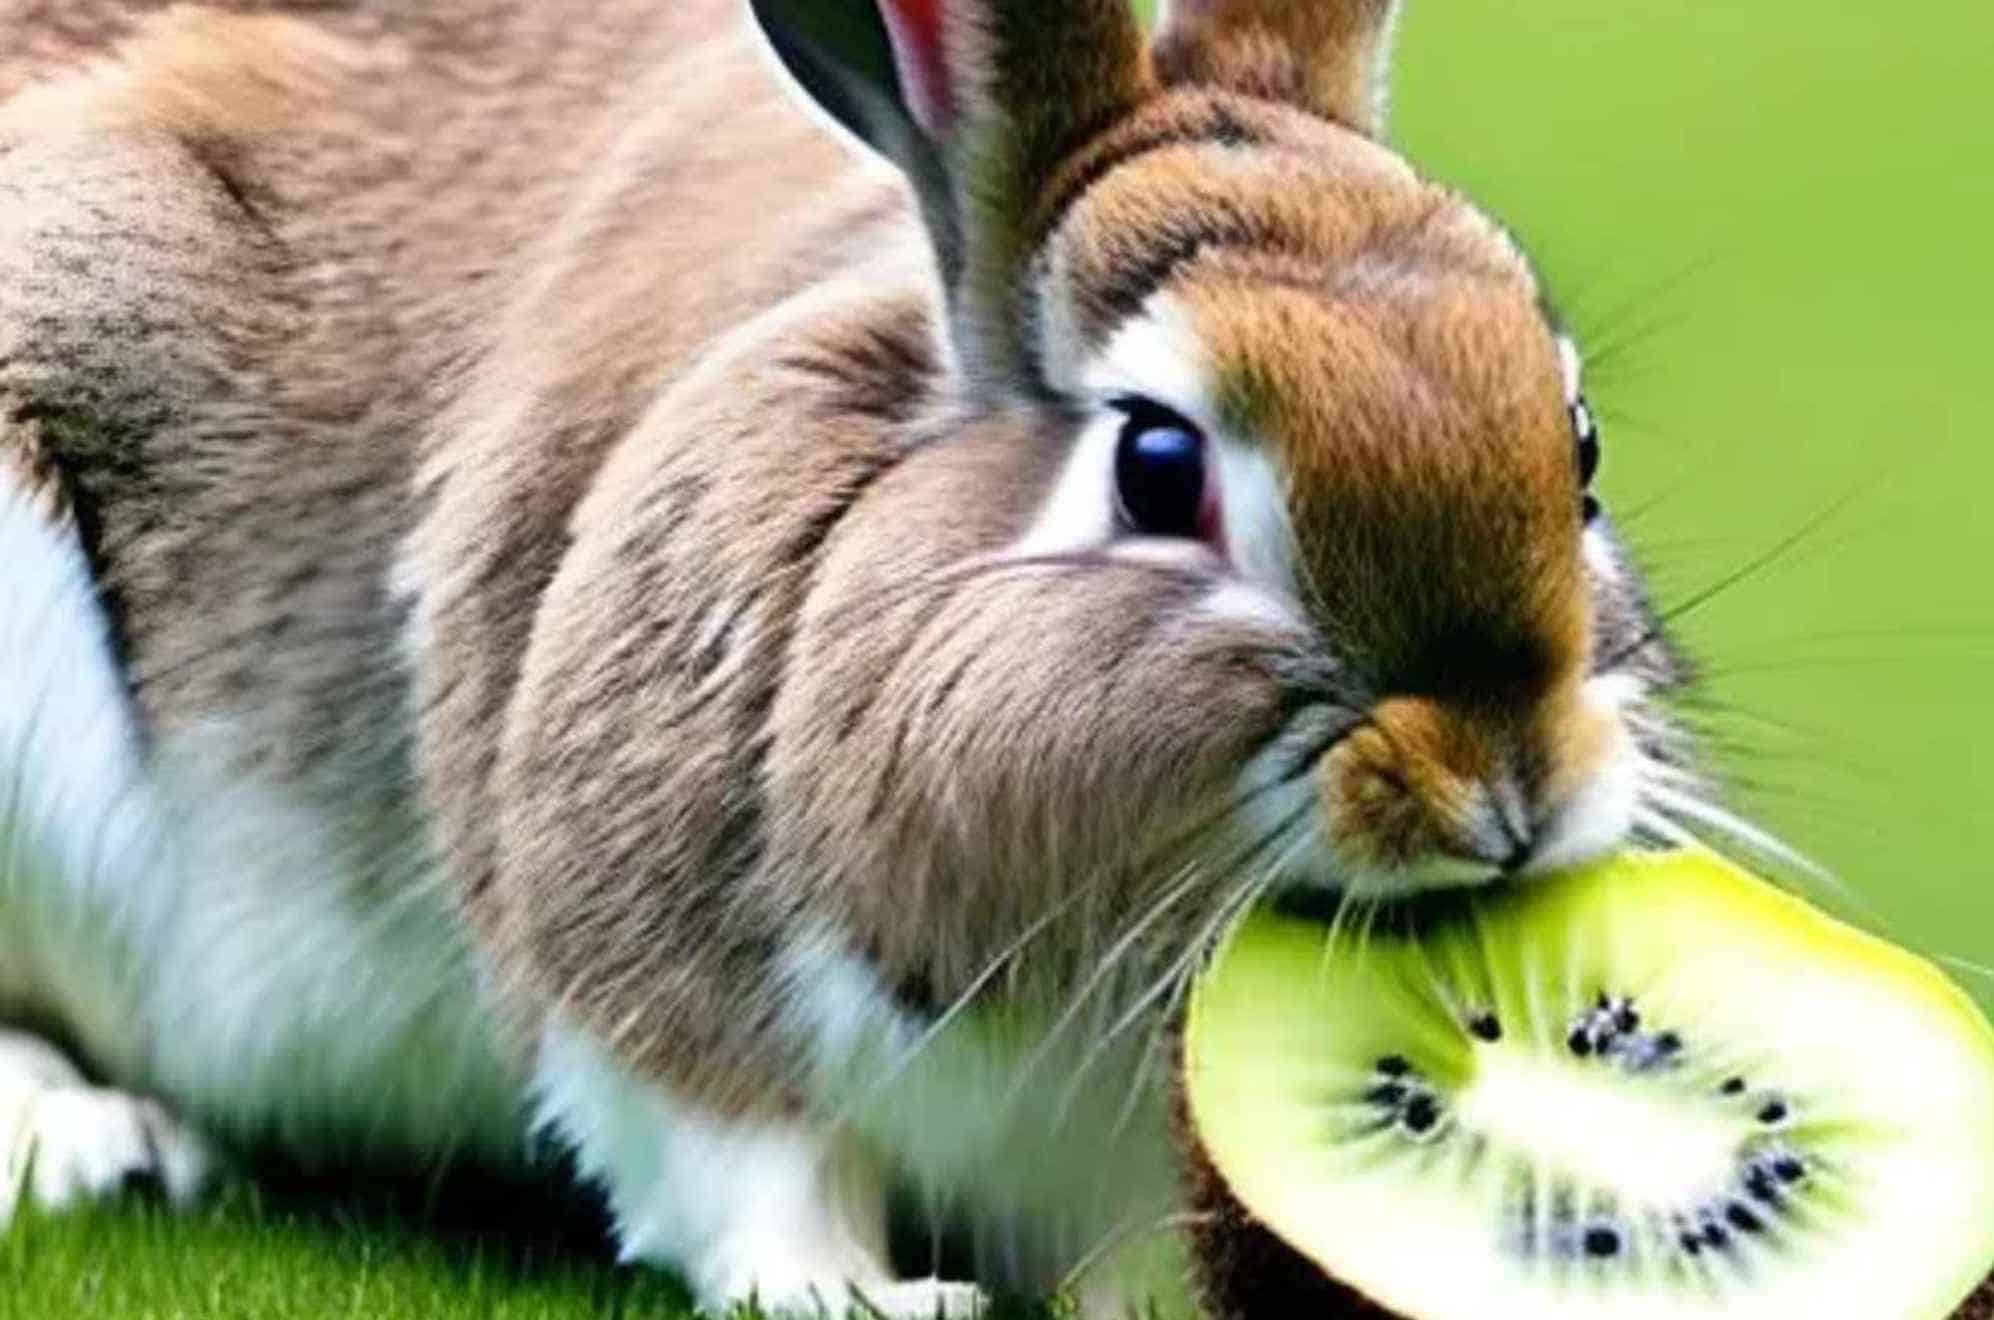 Risks and Considerations When Feeding Kiwi to Rabbits